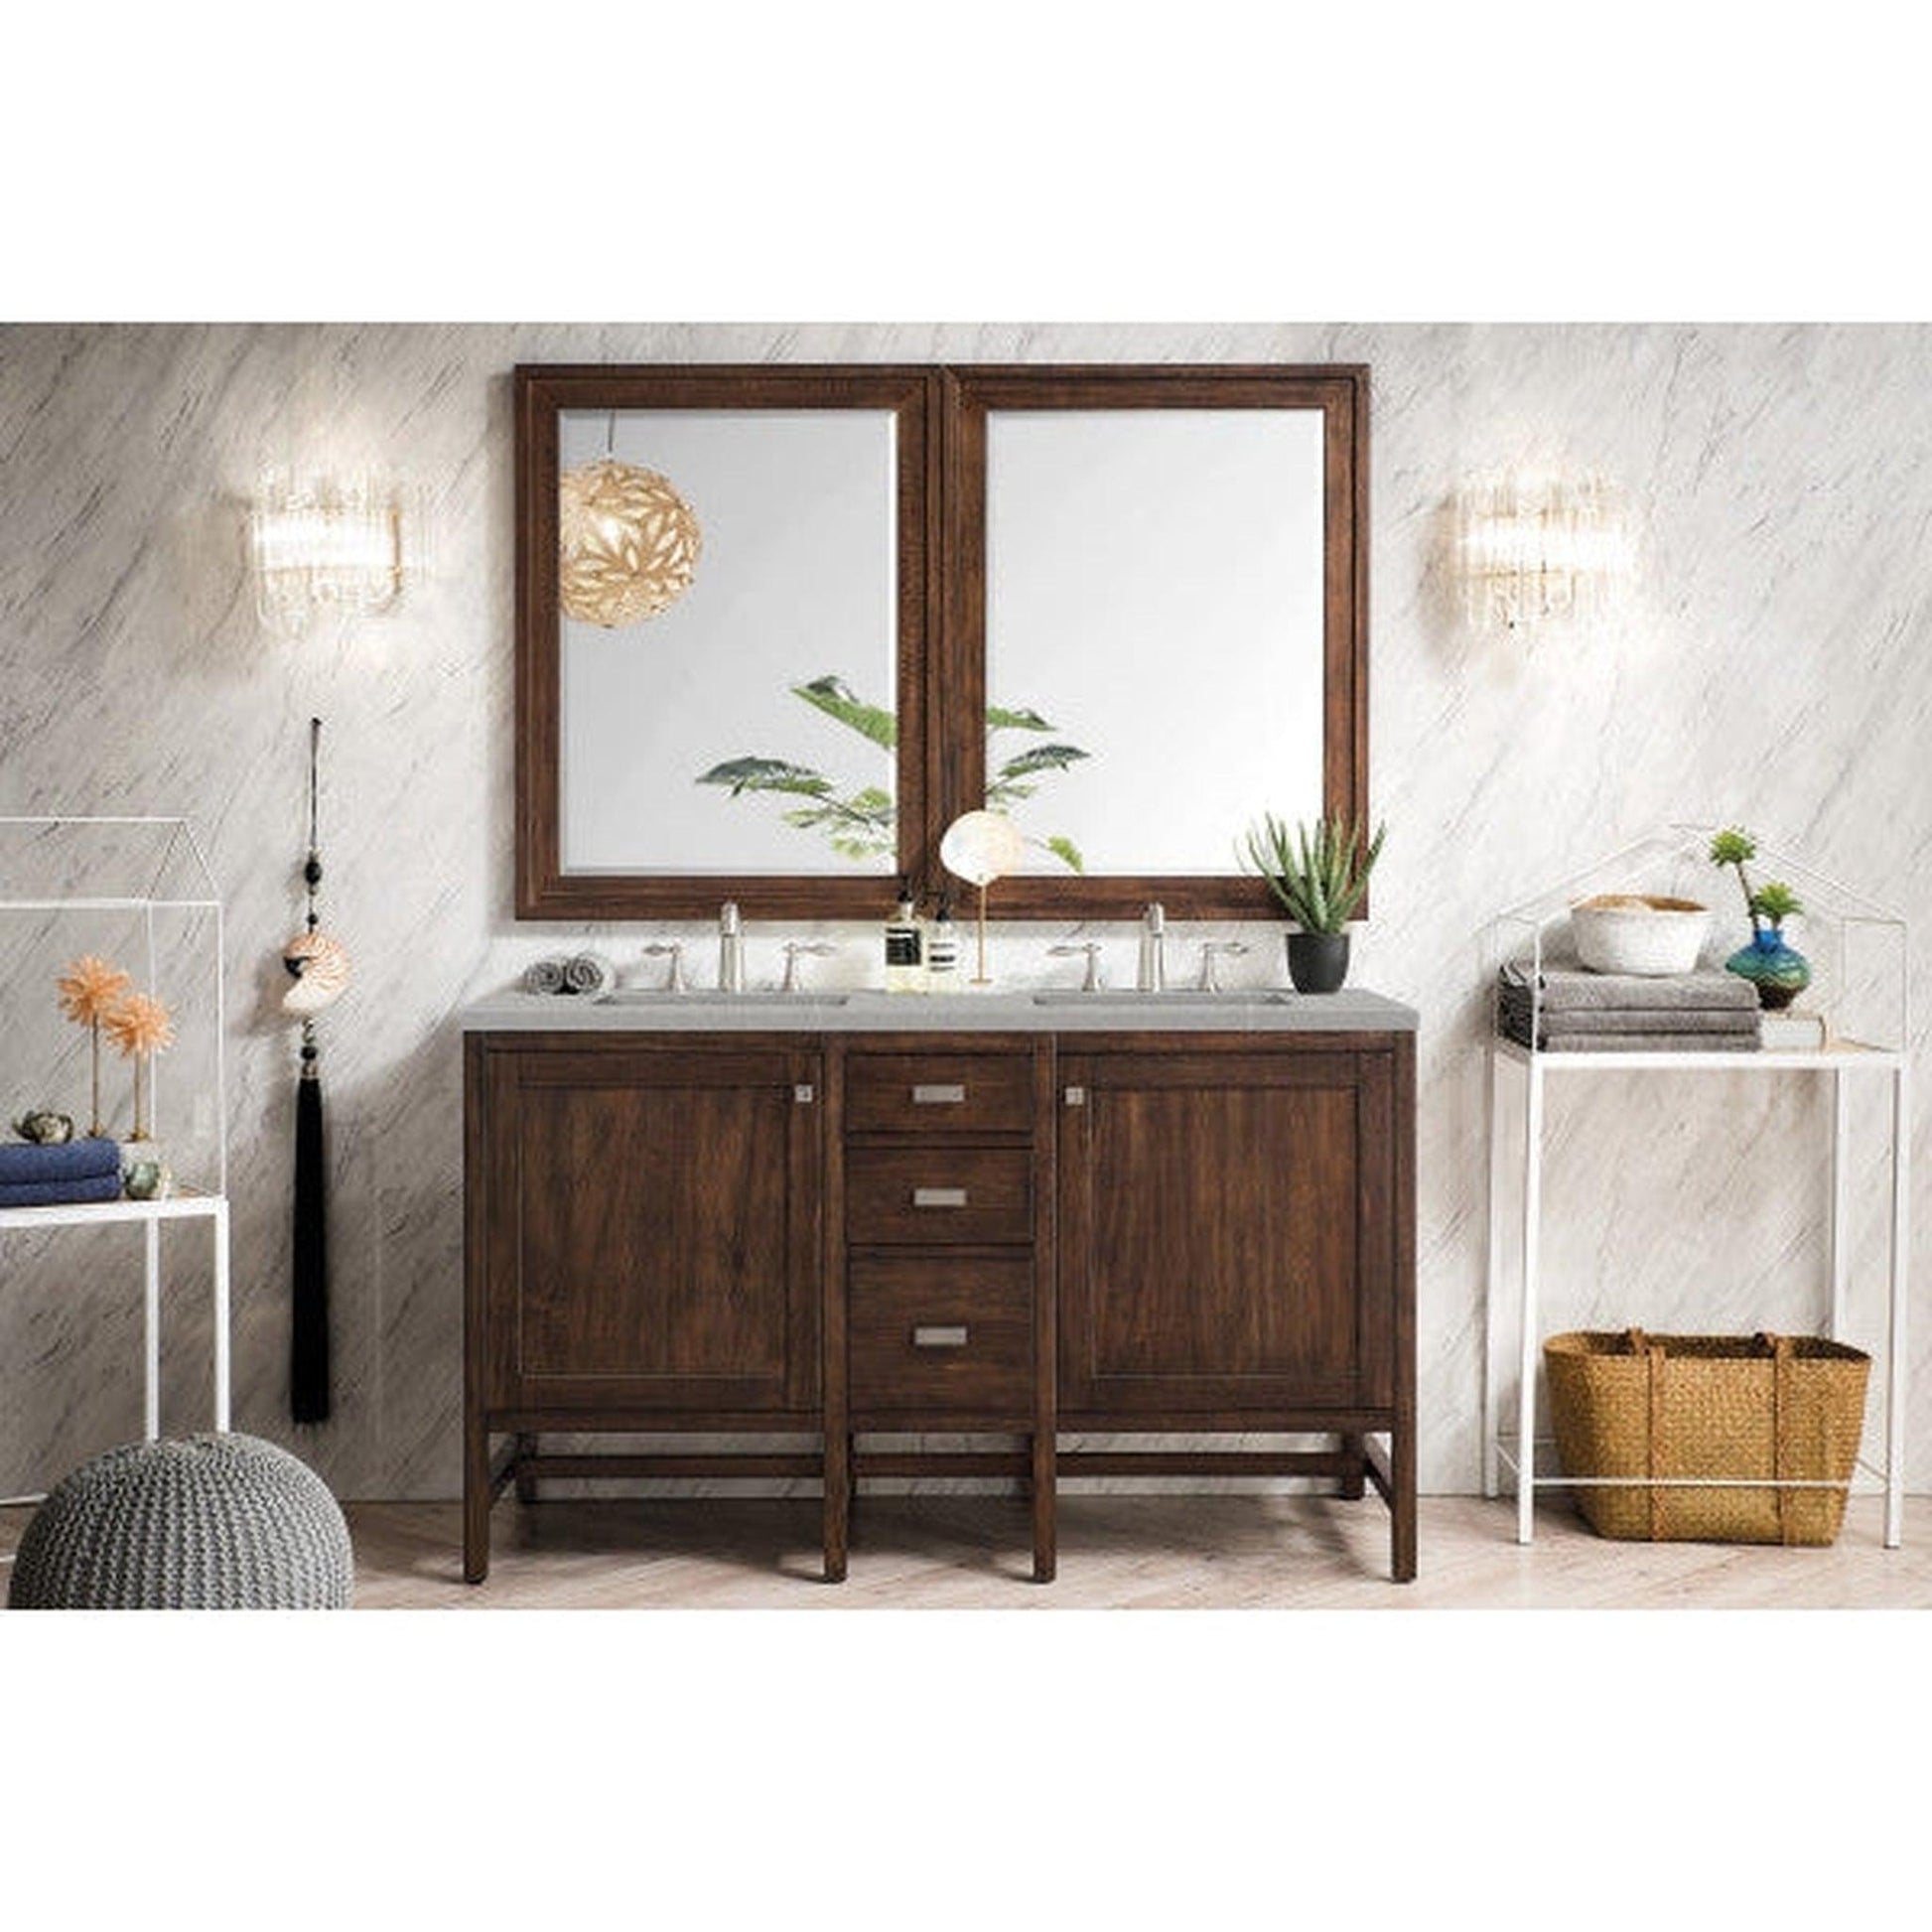 James Martin Addison 60" Double Mid Century Acacia Bathroom Vanity With 1" Eternal Serena Quartz Top and Rectangular Ceramic Sink